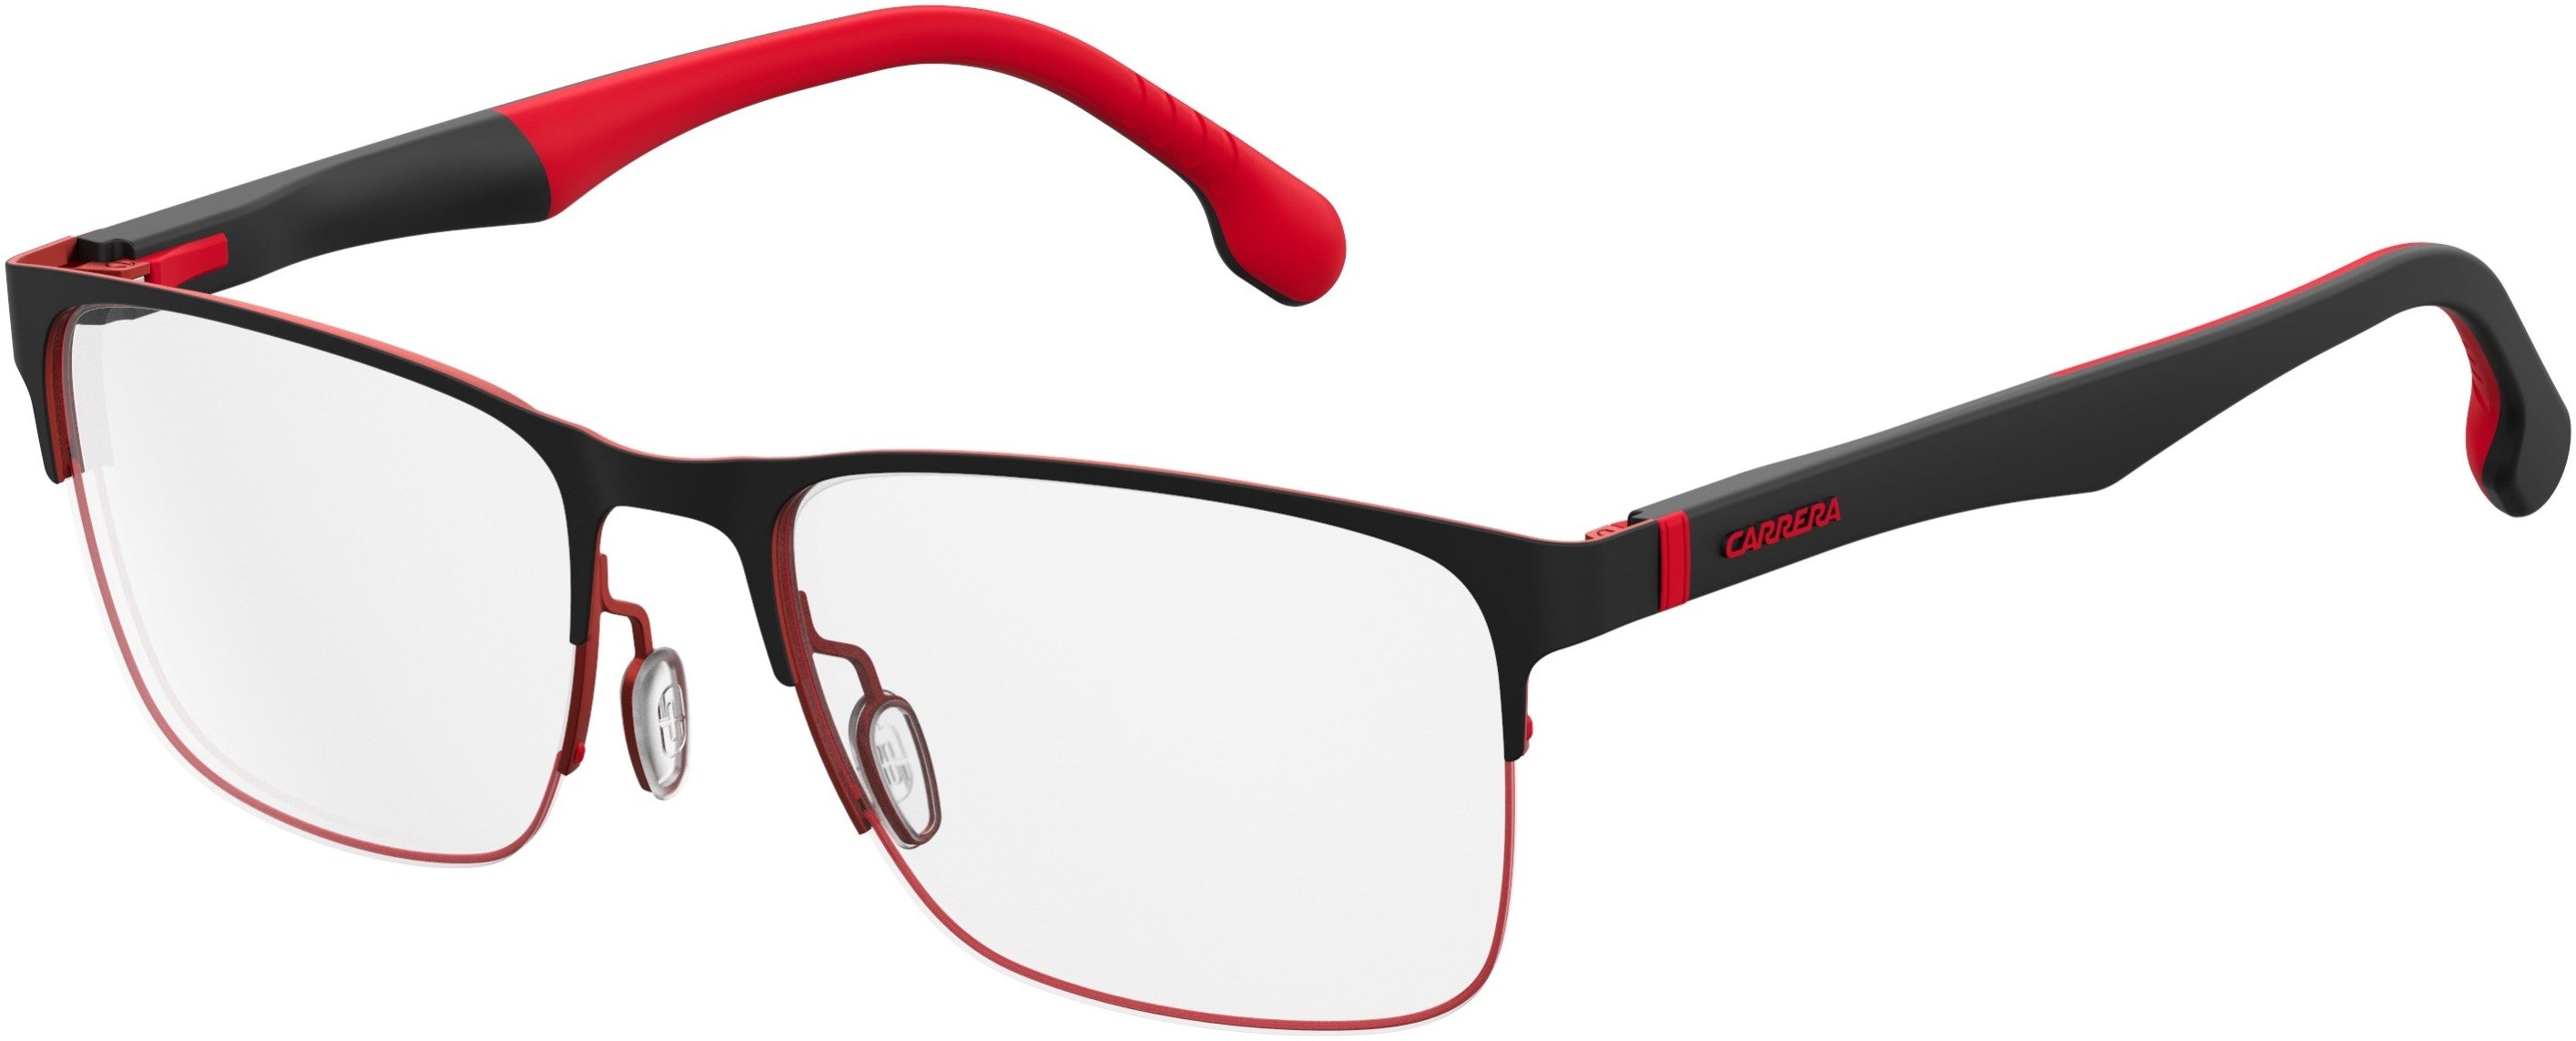  Carrera 8830/V Rectangular Eyeglasses 0BLX-0BLX  Bkrt Crystal Red (00 Demo Lens)